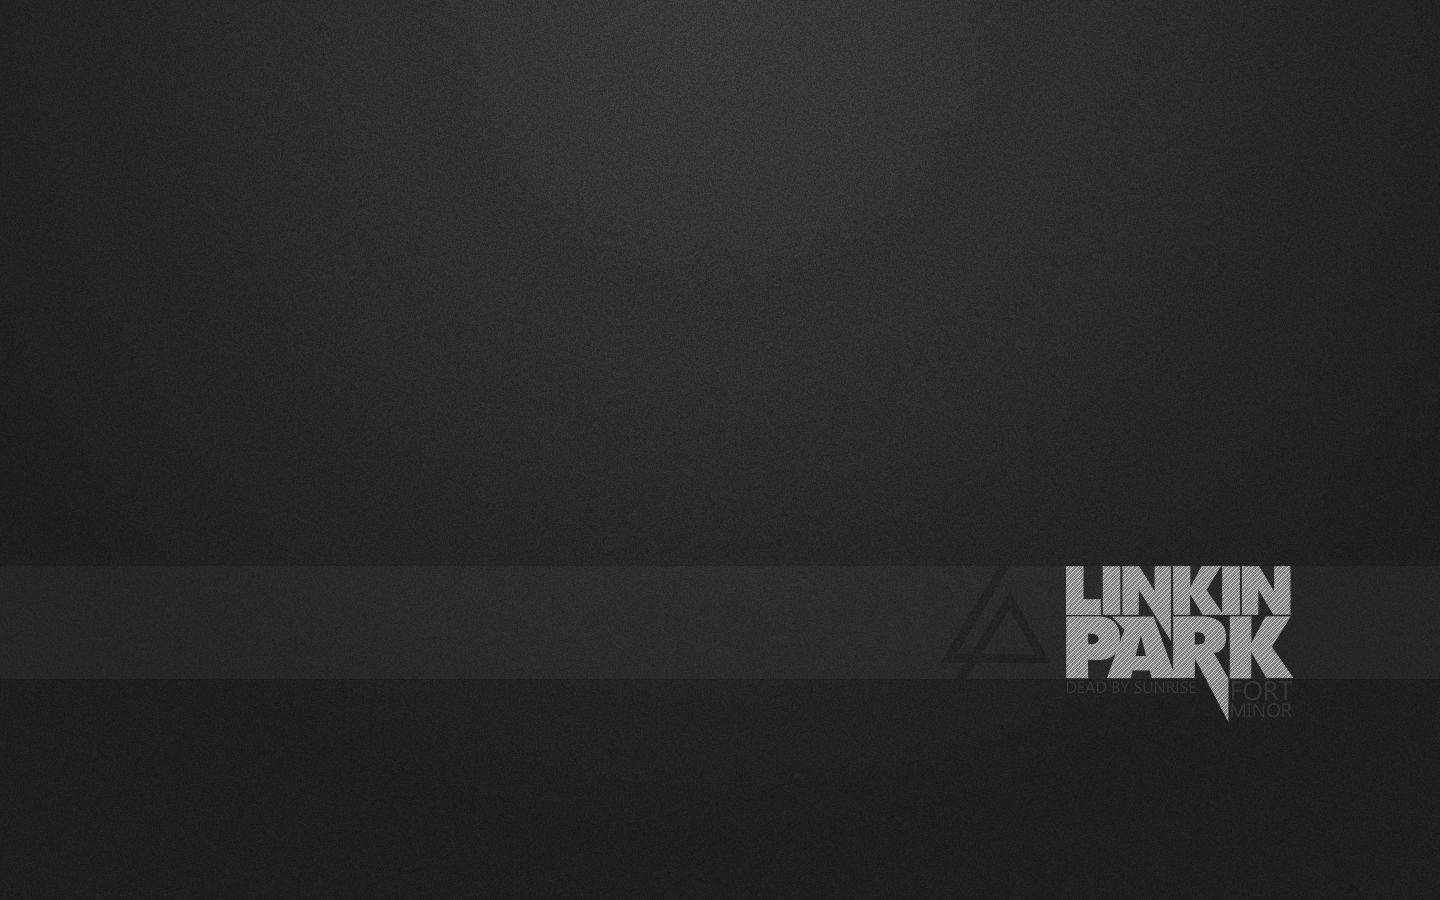 Linkin Park Wallpaper 3 2632 High Definition Wallpaper. wallalay.com